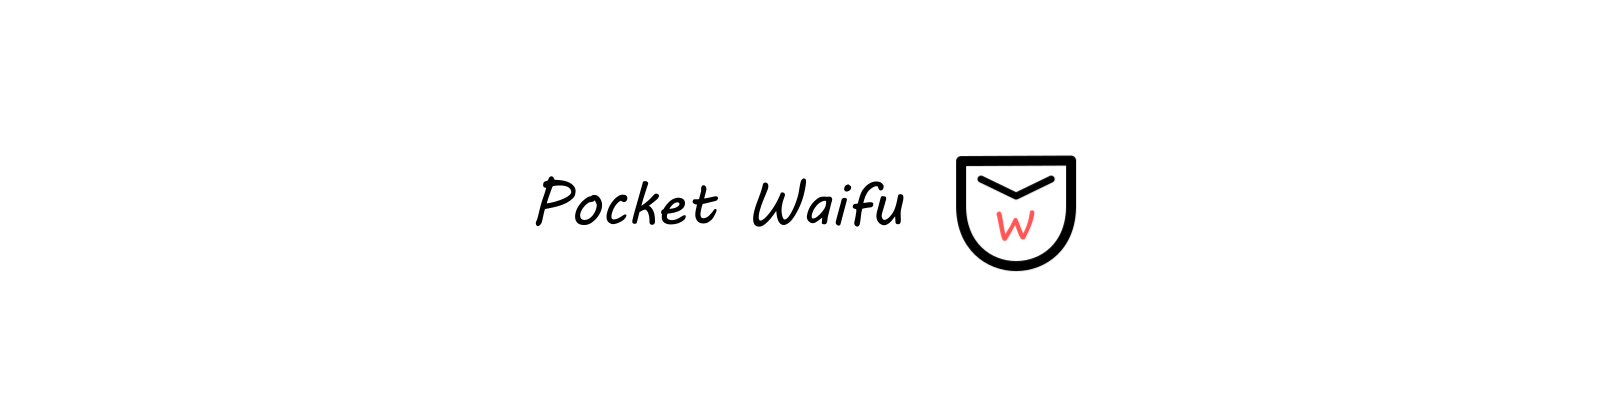 My Pocket Waifu - v0.15